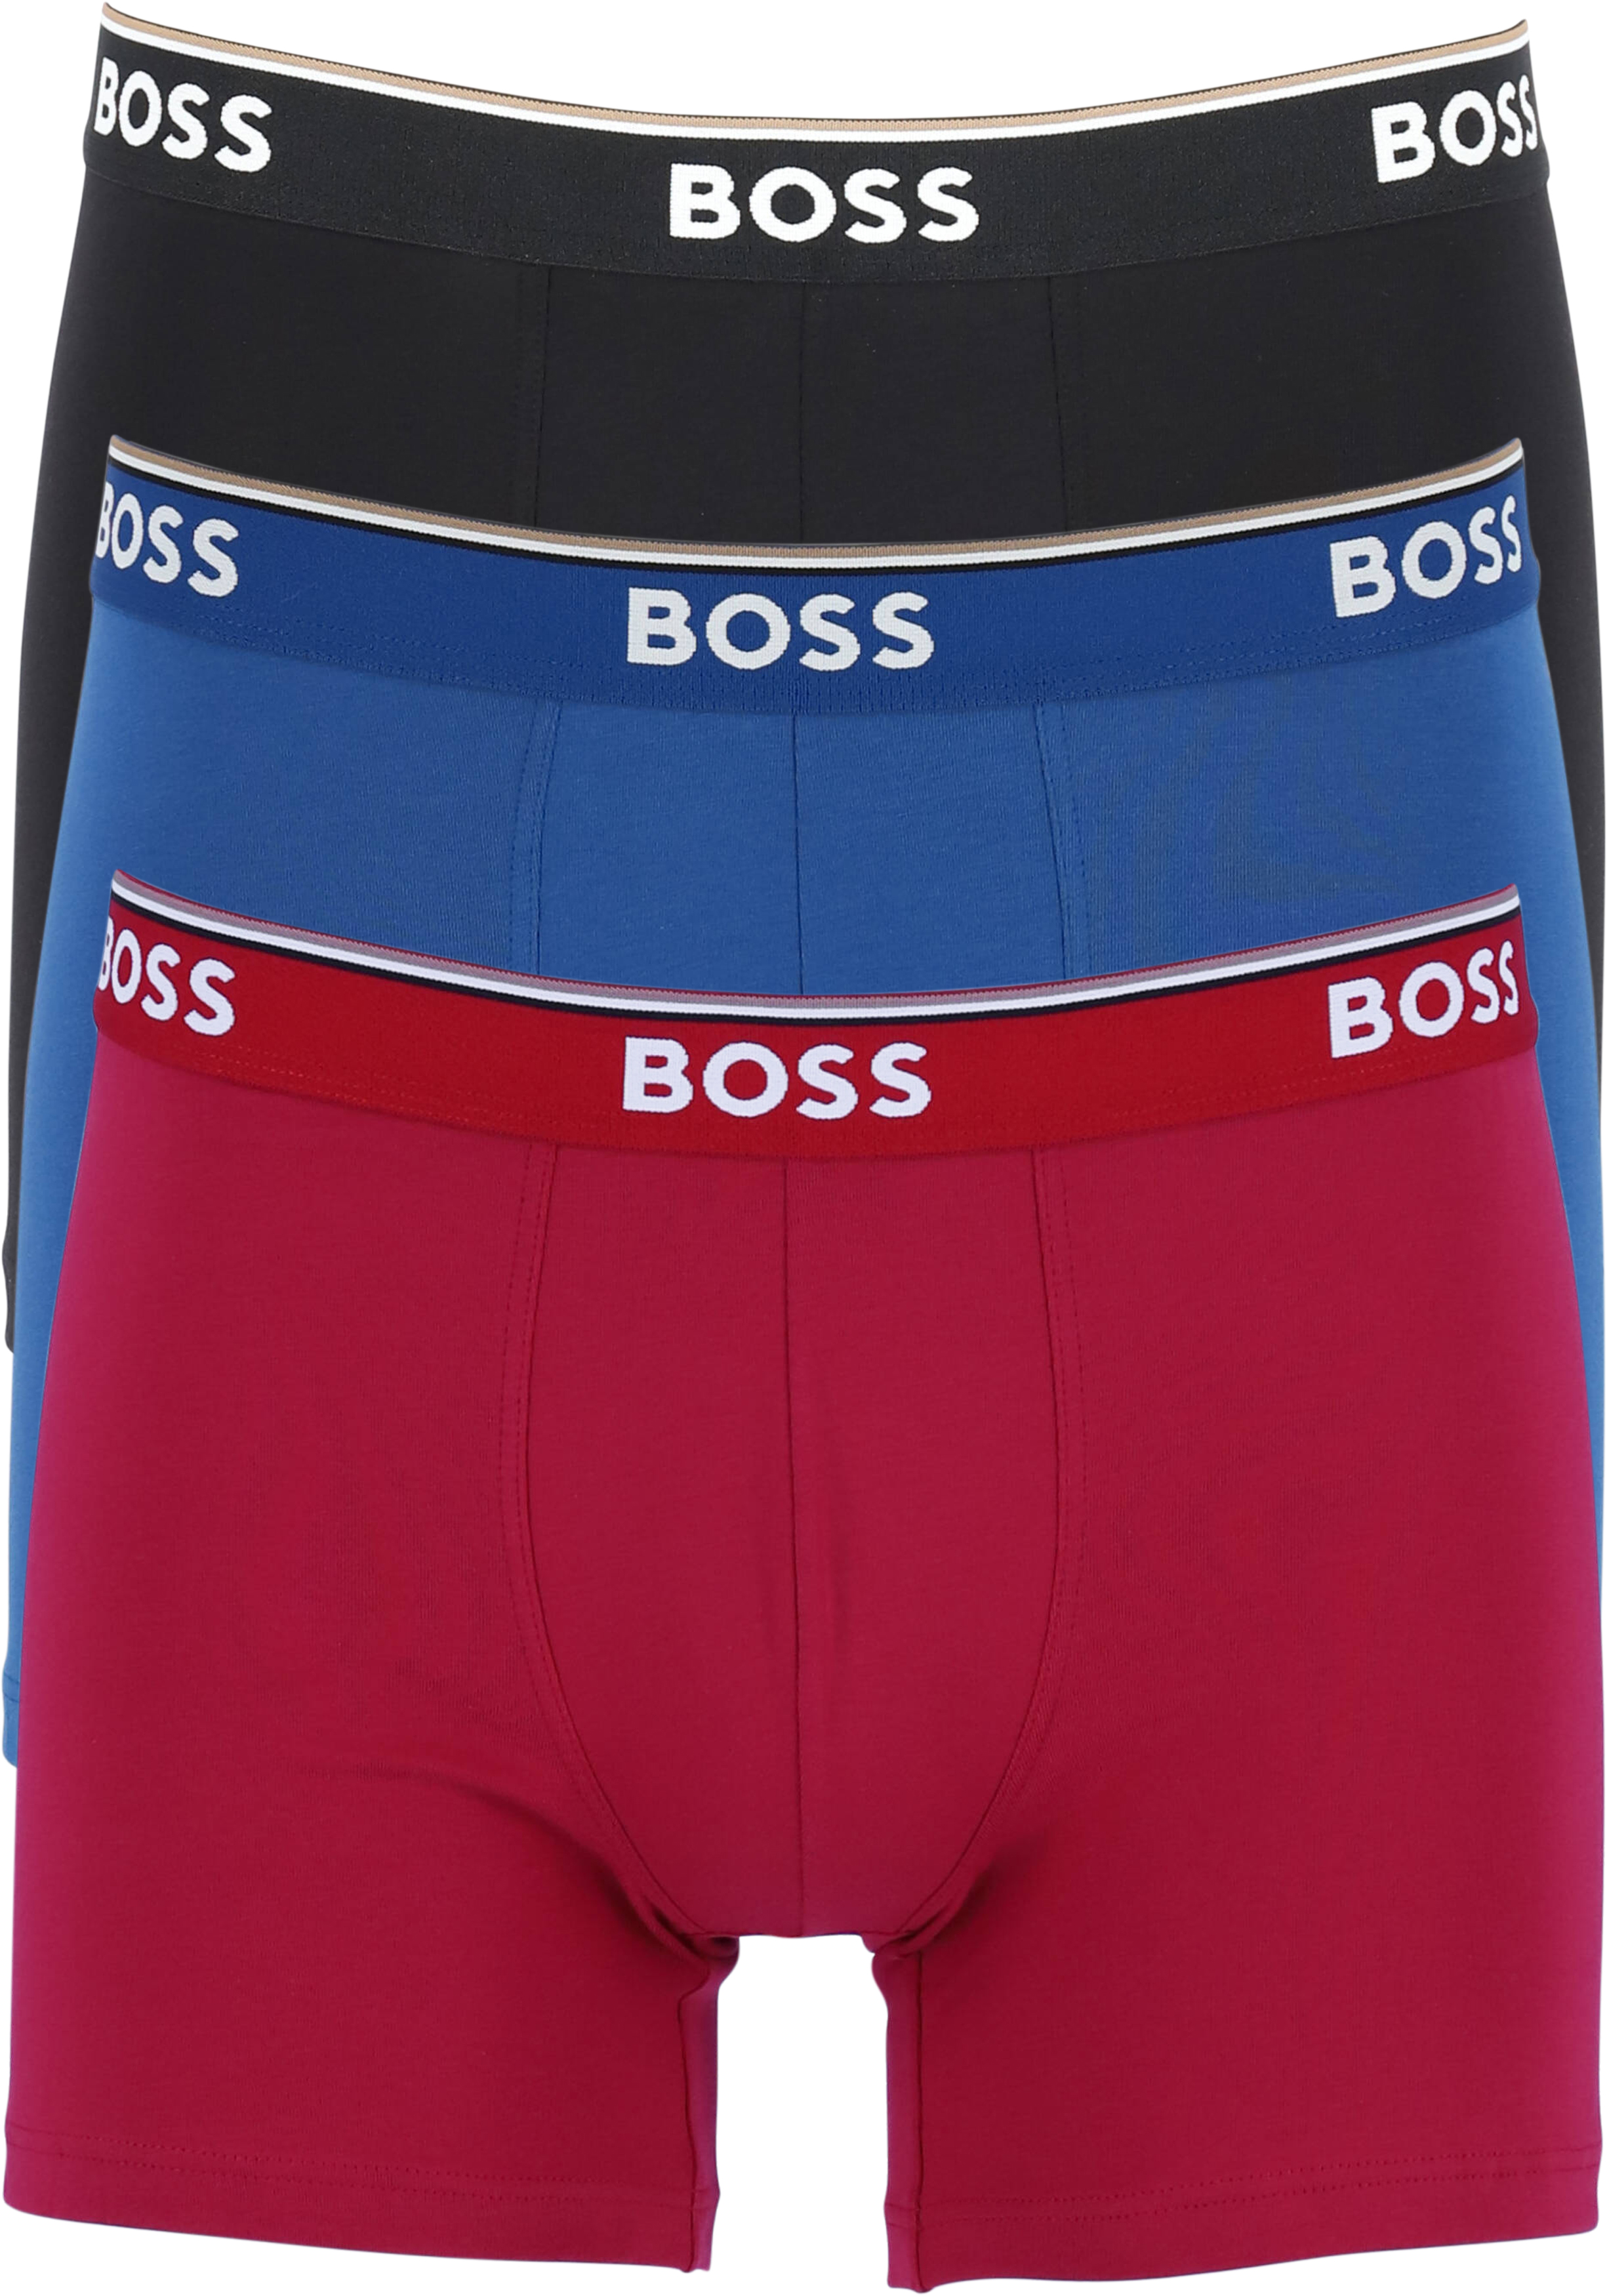 HUGO BOSS Power boxer briefs (3-pack), heren boxers normale lengte, rood, blauw, zwart